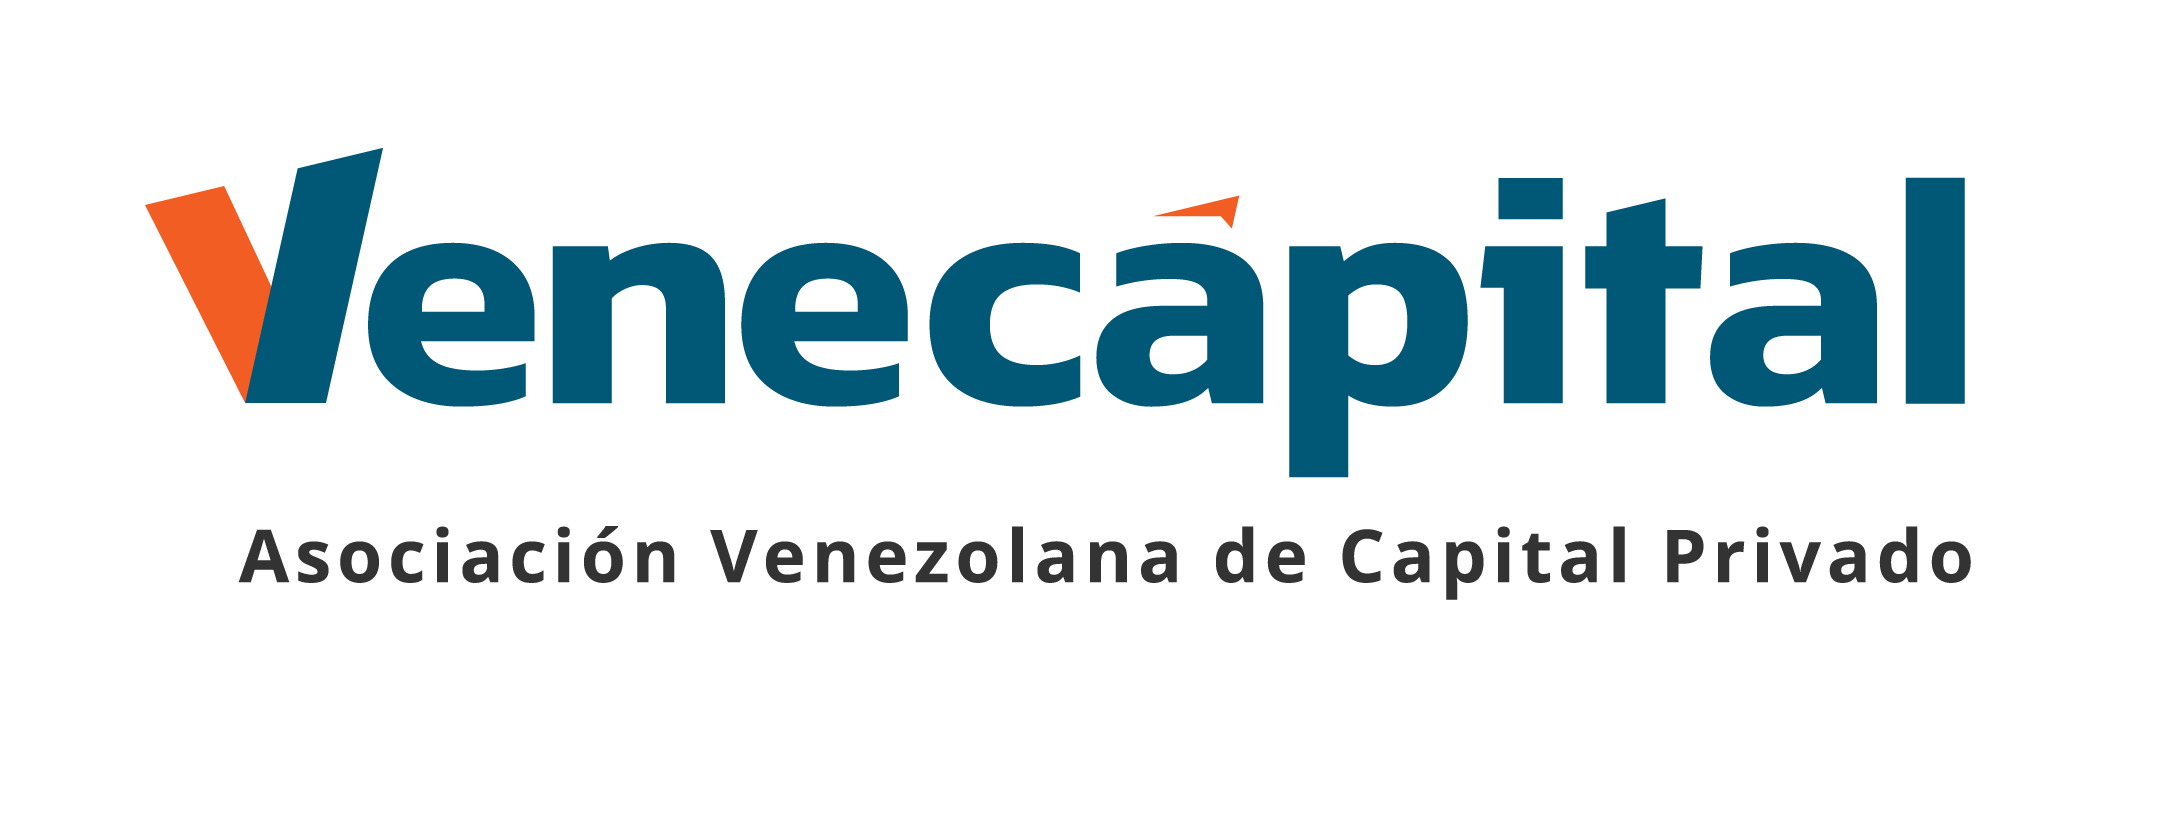 venecapital-logo.png